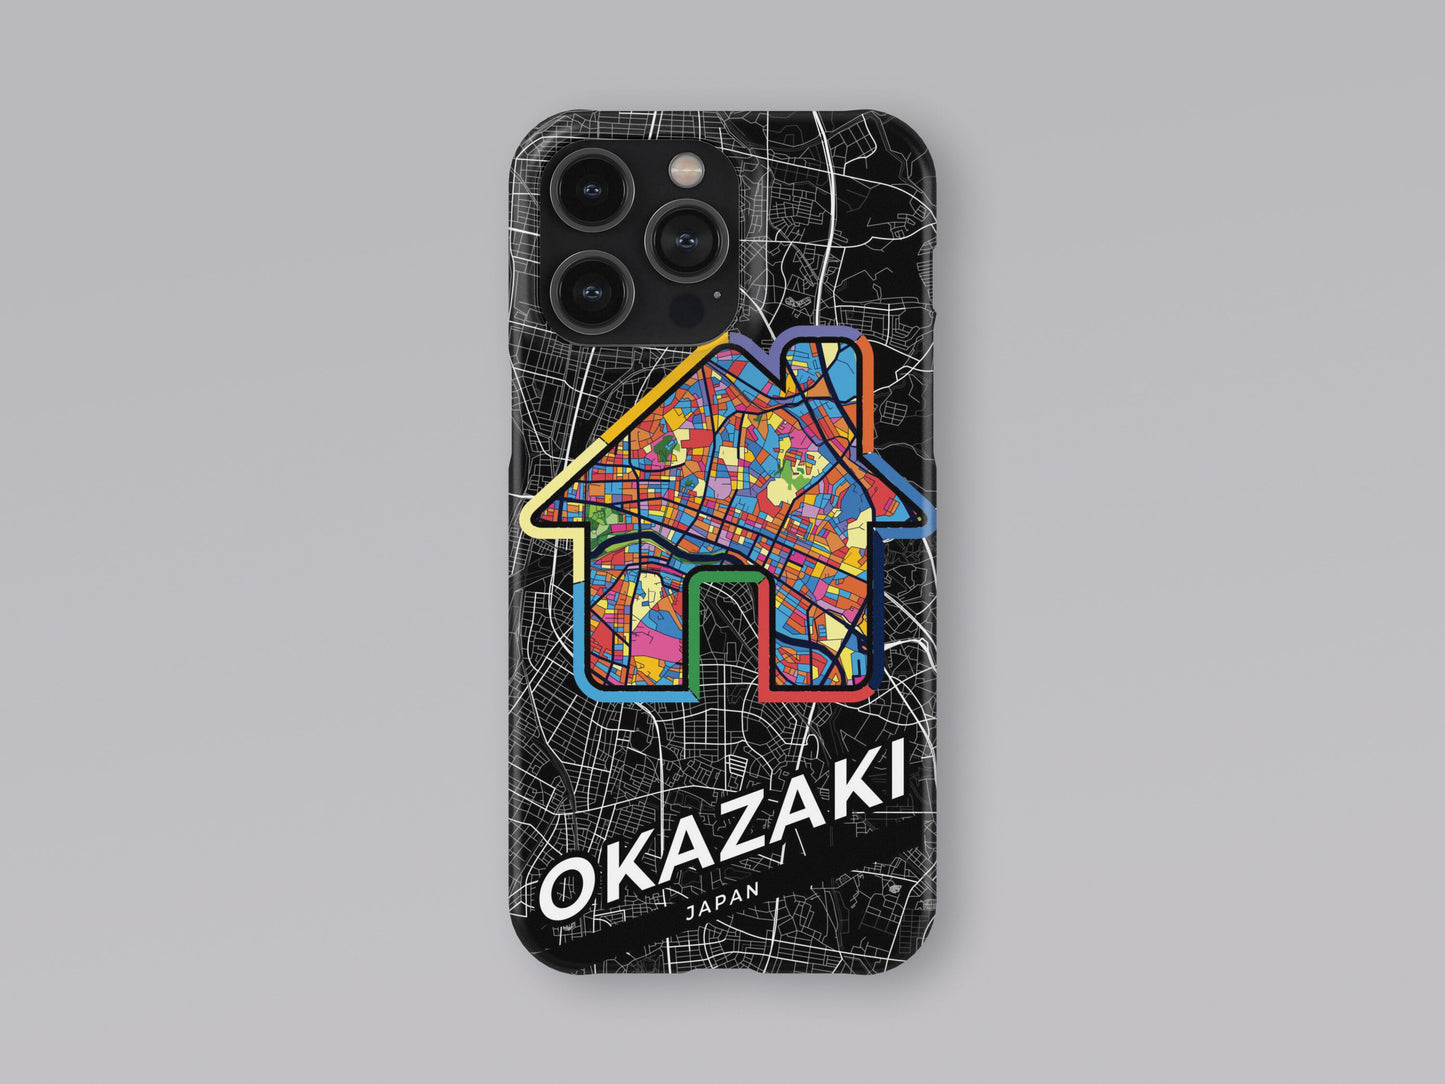 Okazaki Japan slim phone case with colorful icon 3